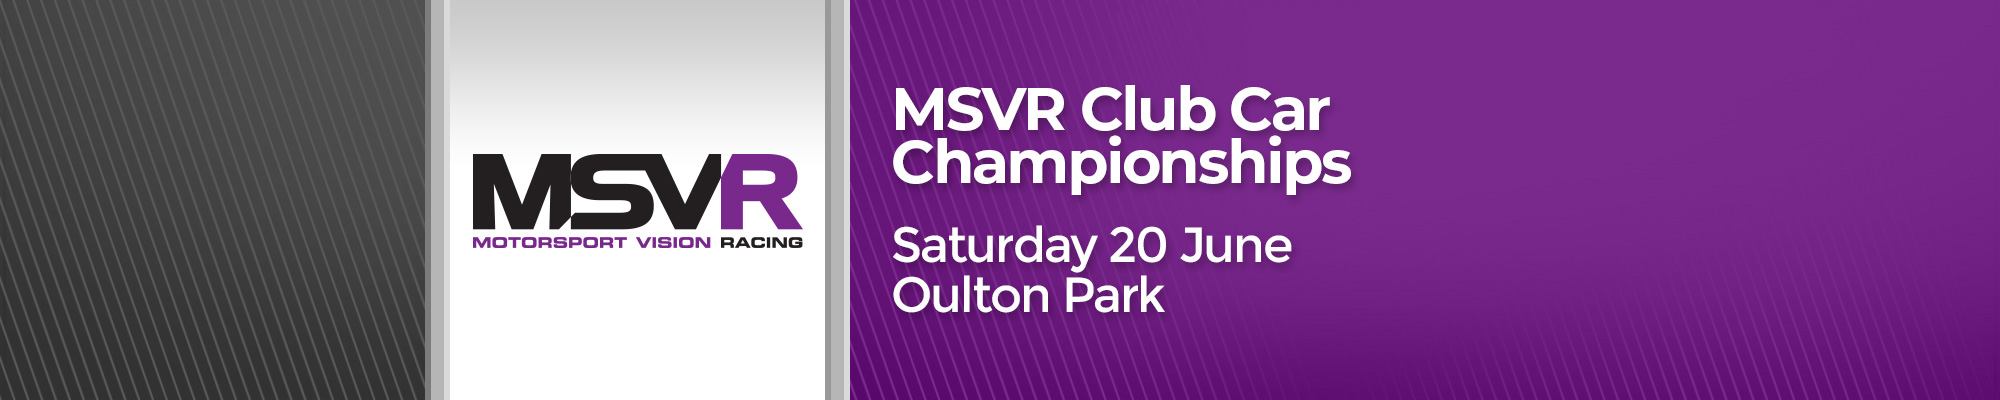  MSVR Club Car Championships - POSTPONED